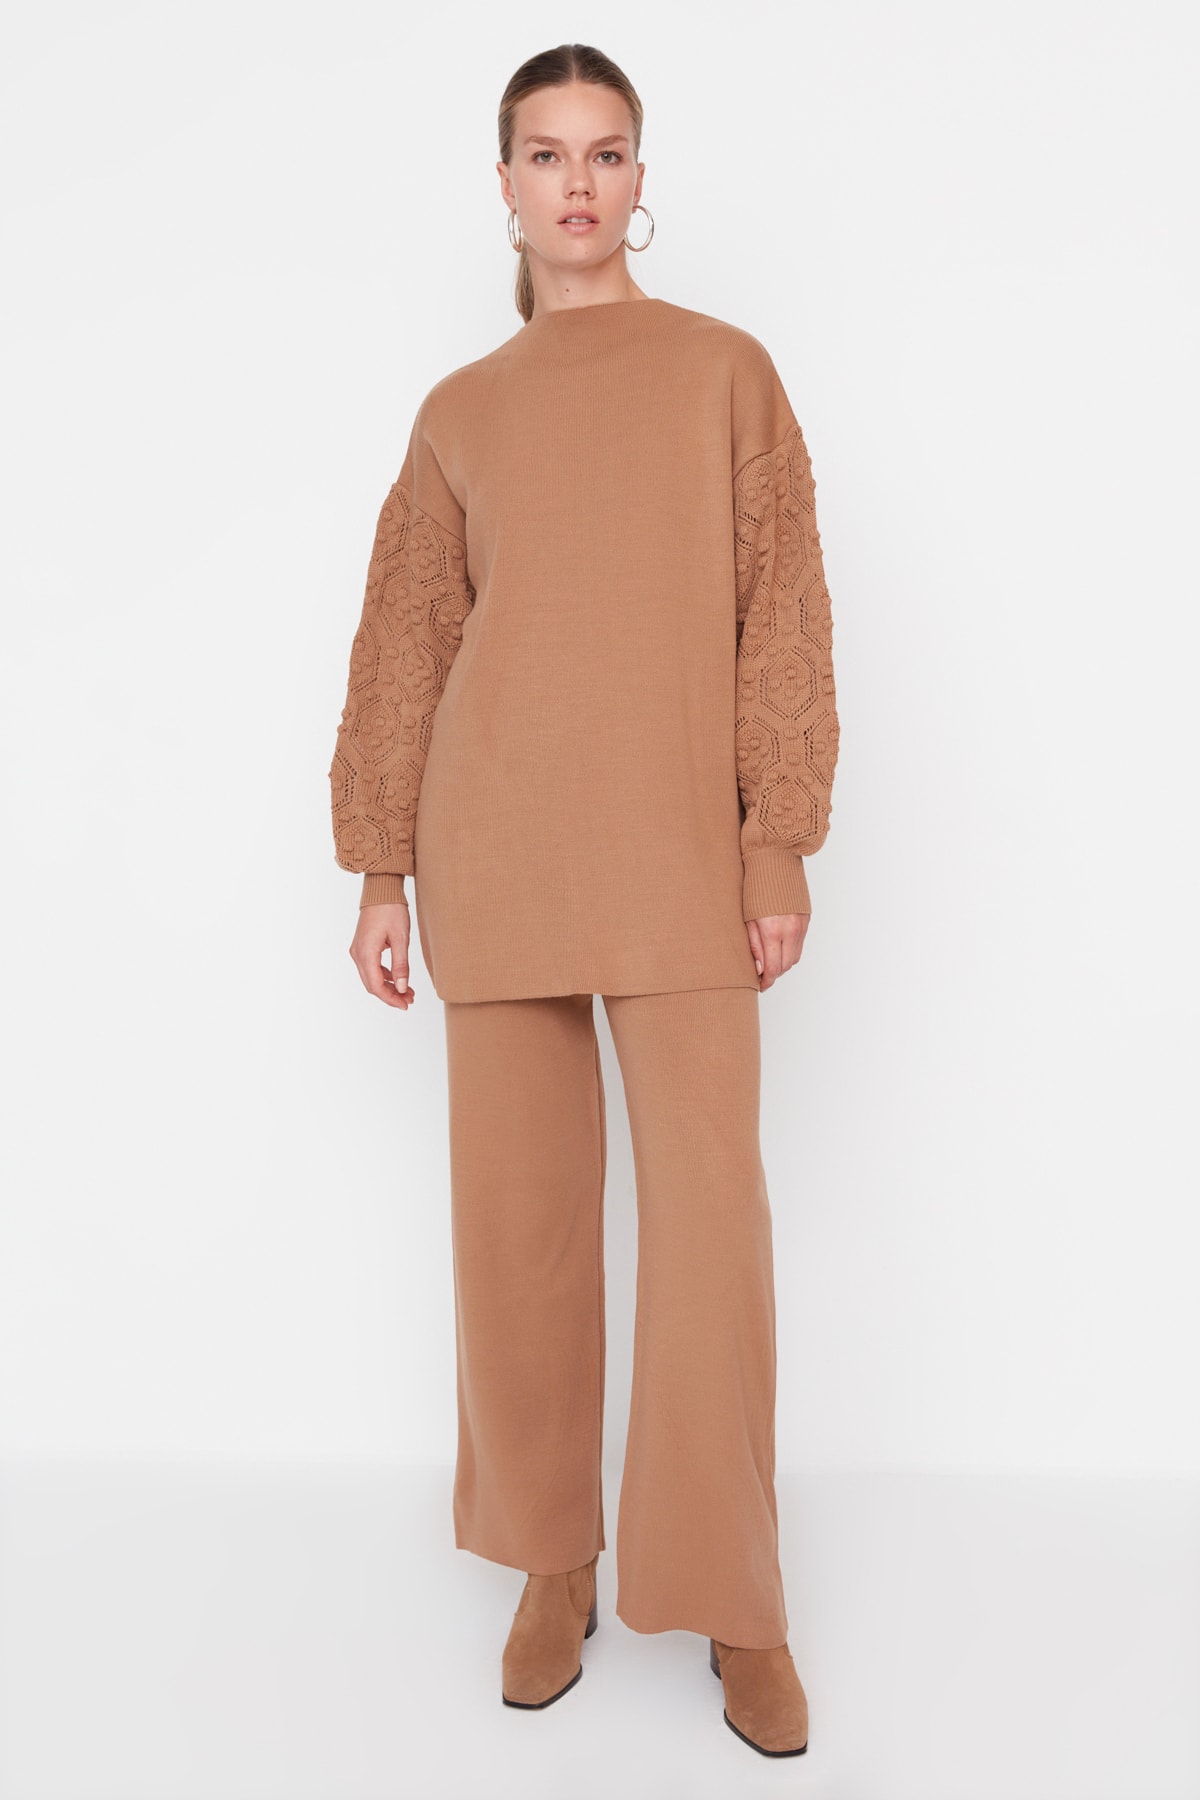 Levně Trendyol Beige Sleeves With Openwork Braided Sweater-Pants Knitwear Suit